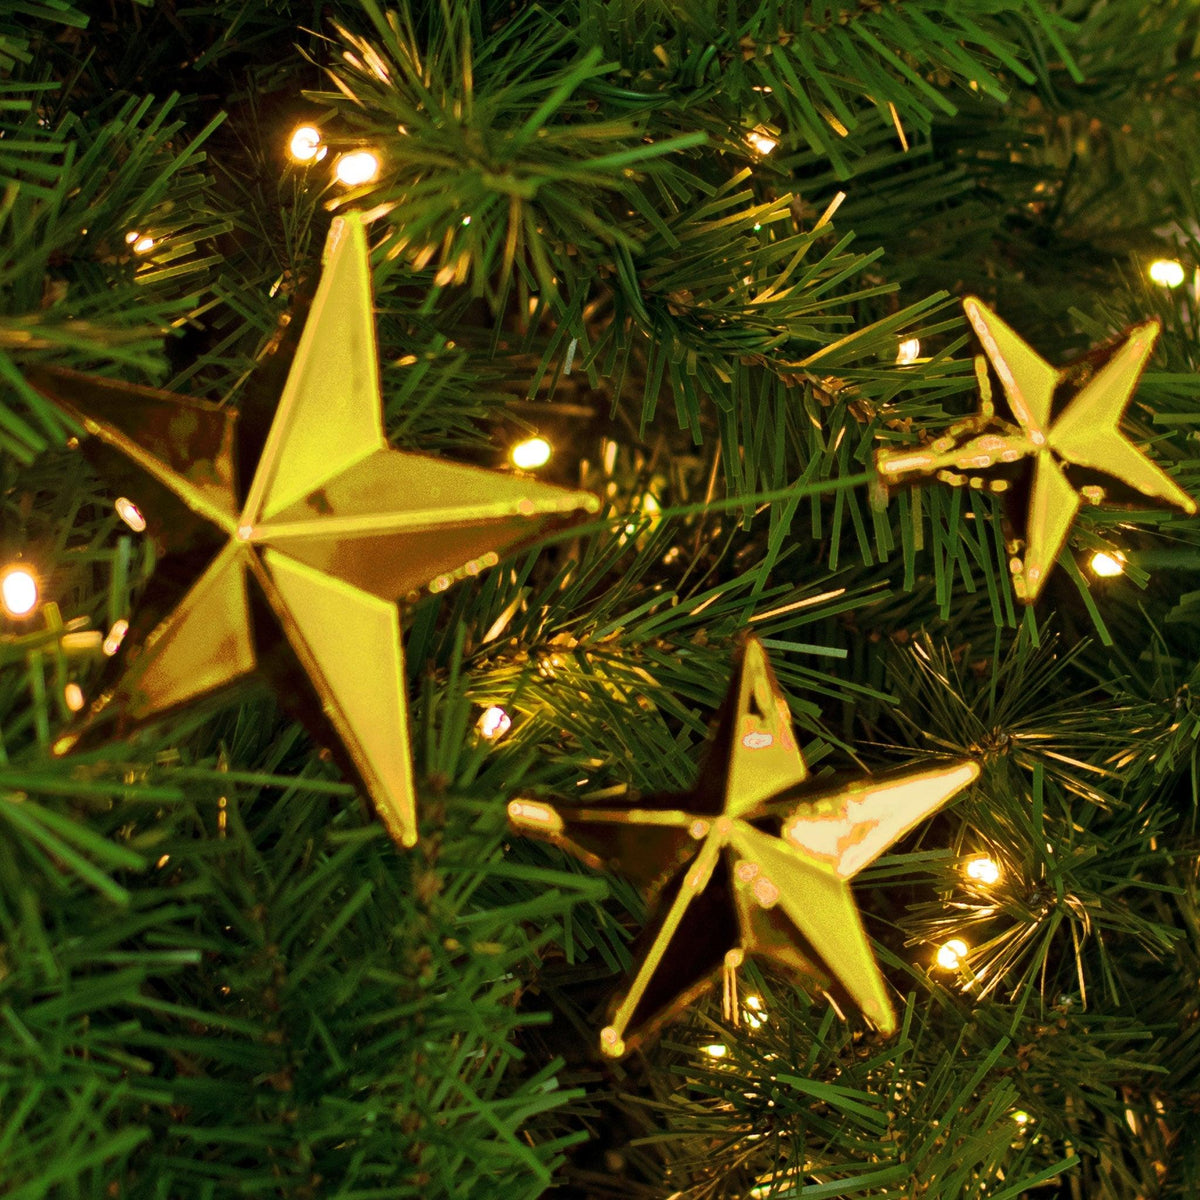 Gold Star Pick Ornaments - Lee Display